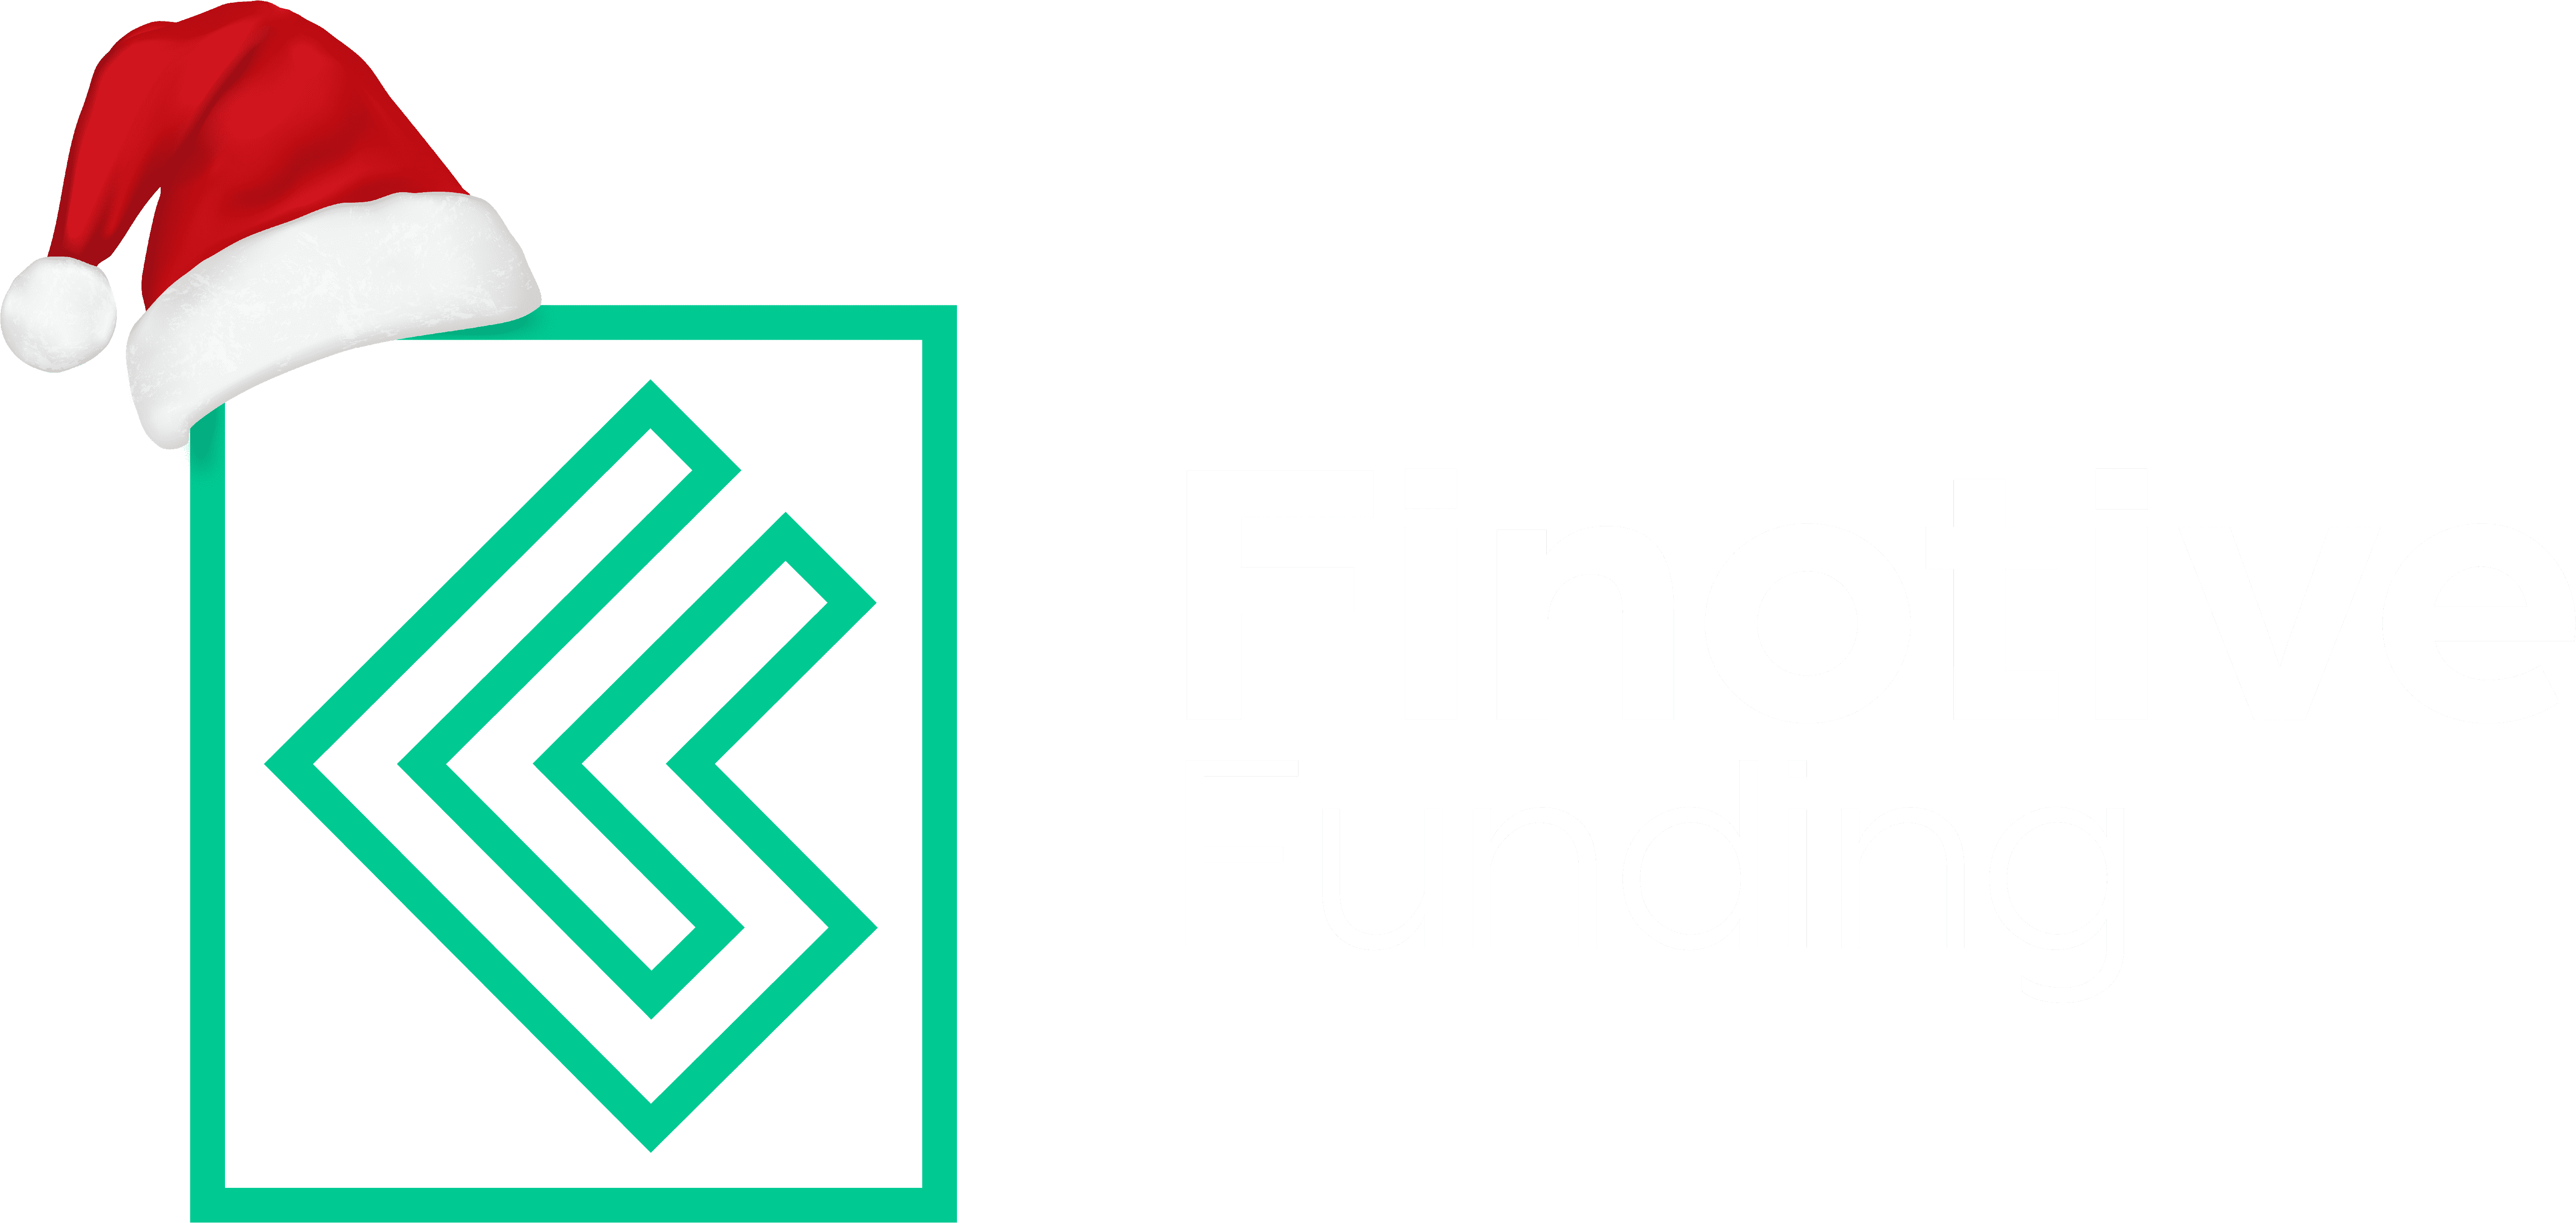 finotive funding logo